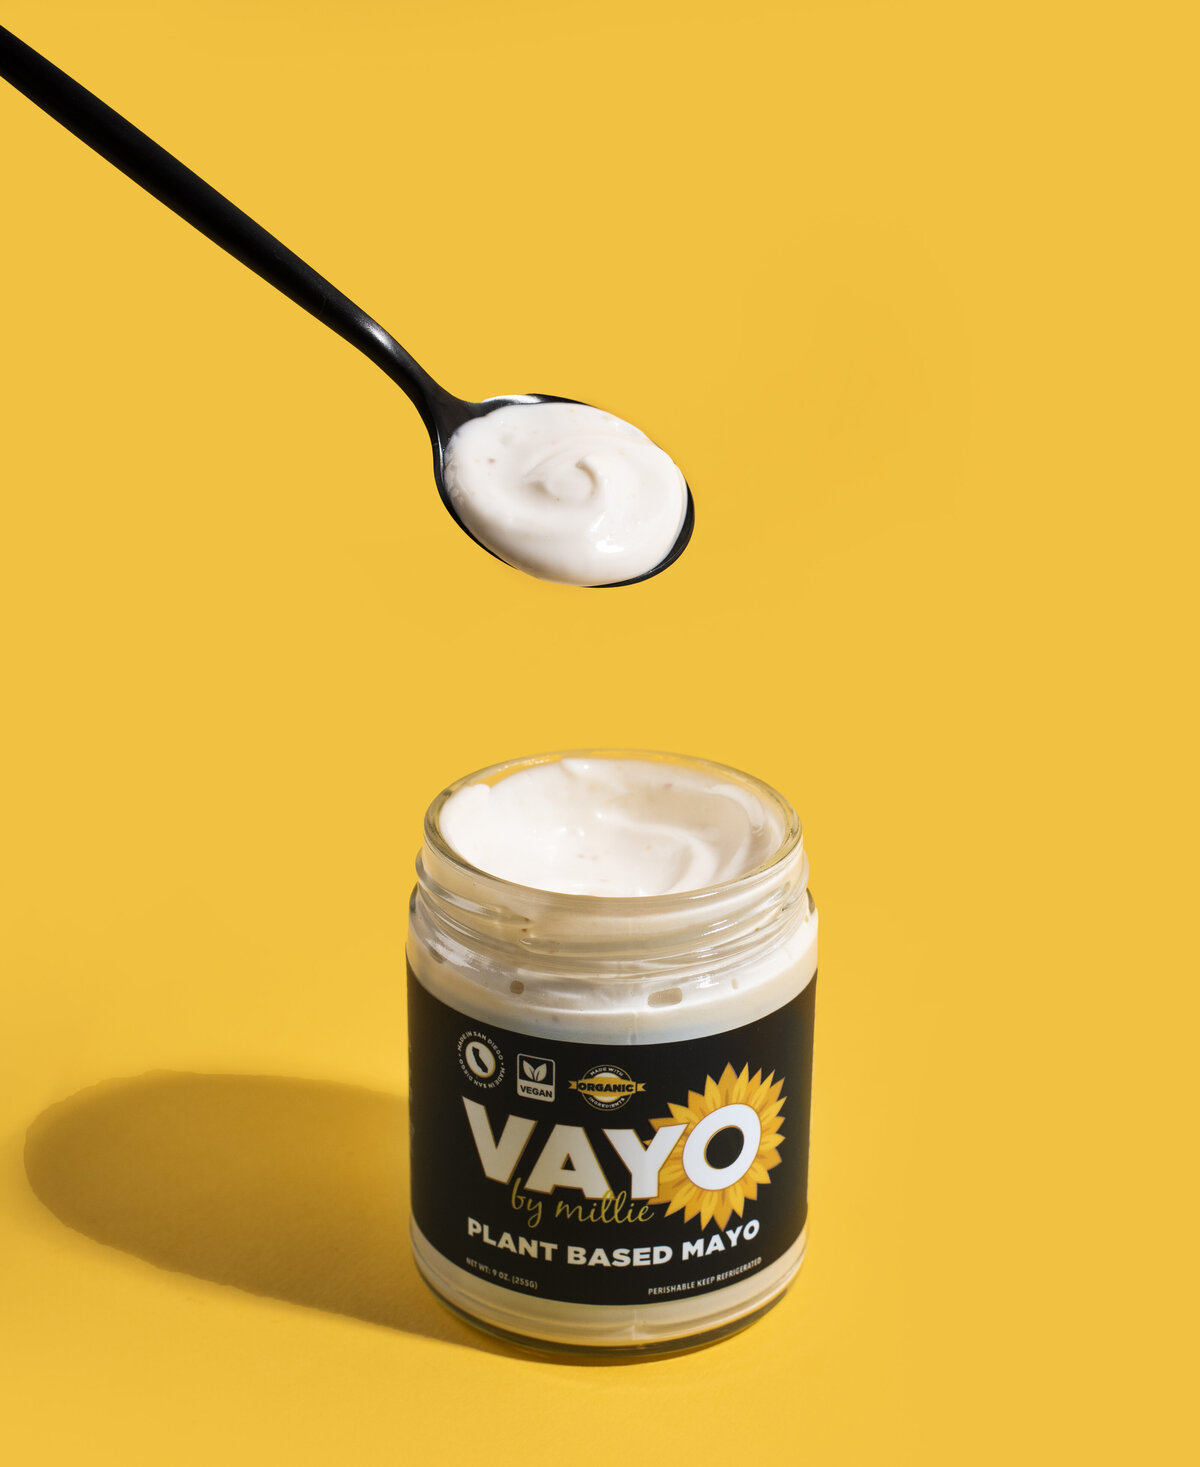 vayo vegan mayo texture product photography